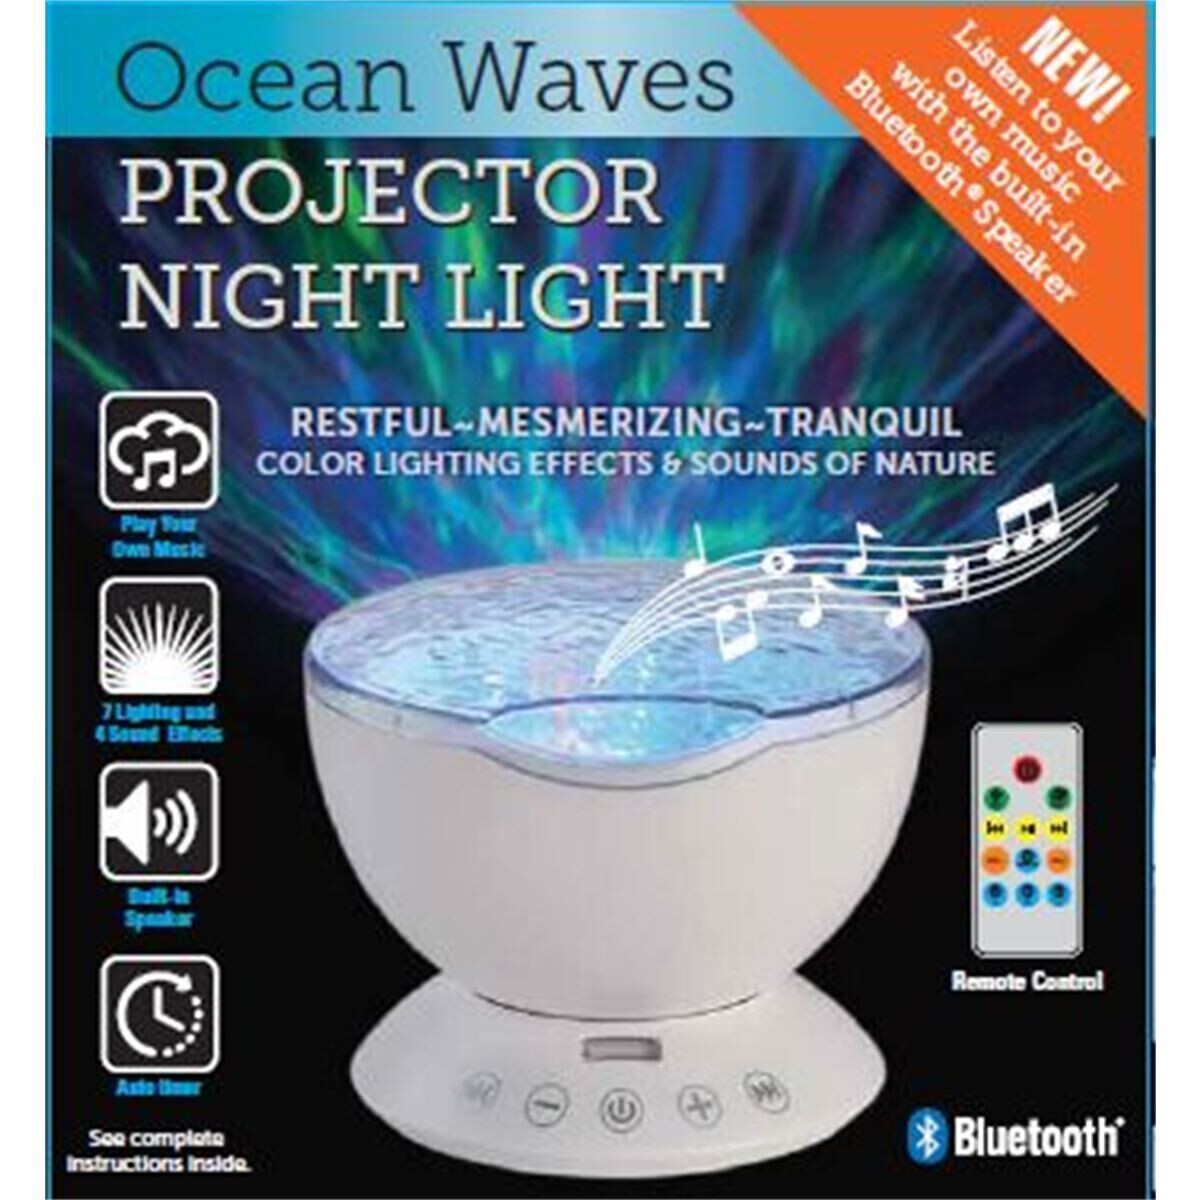 Ocean Wave Projector Night Light w/Bluetooth